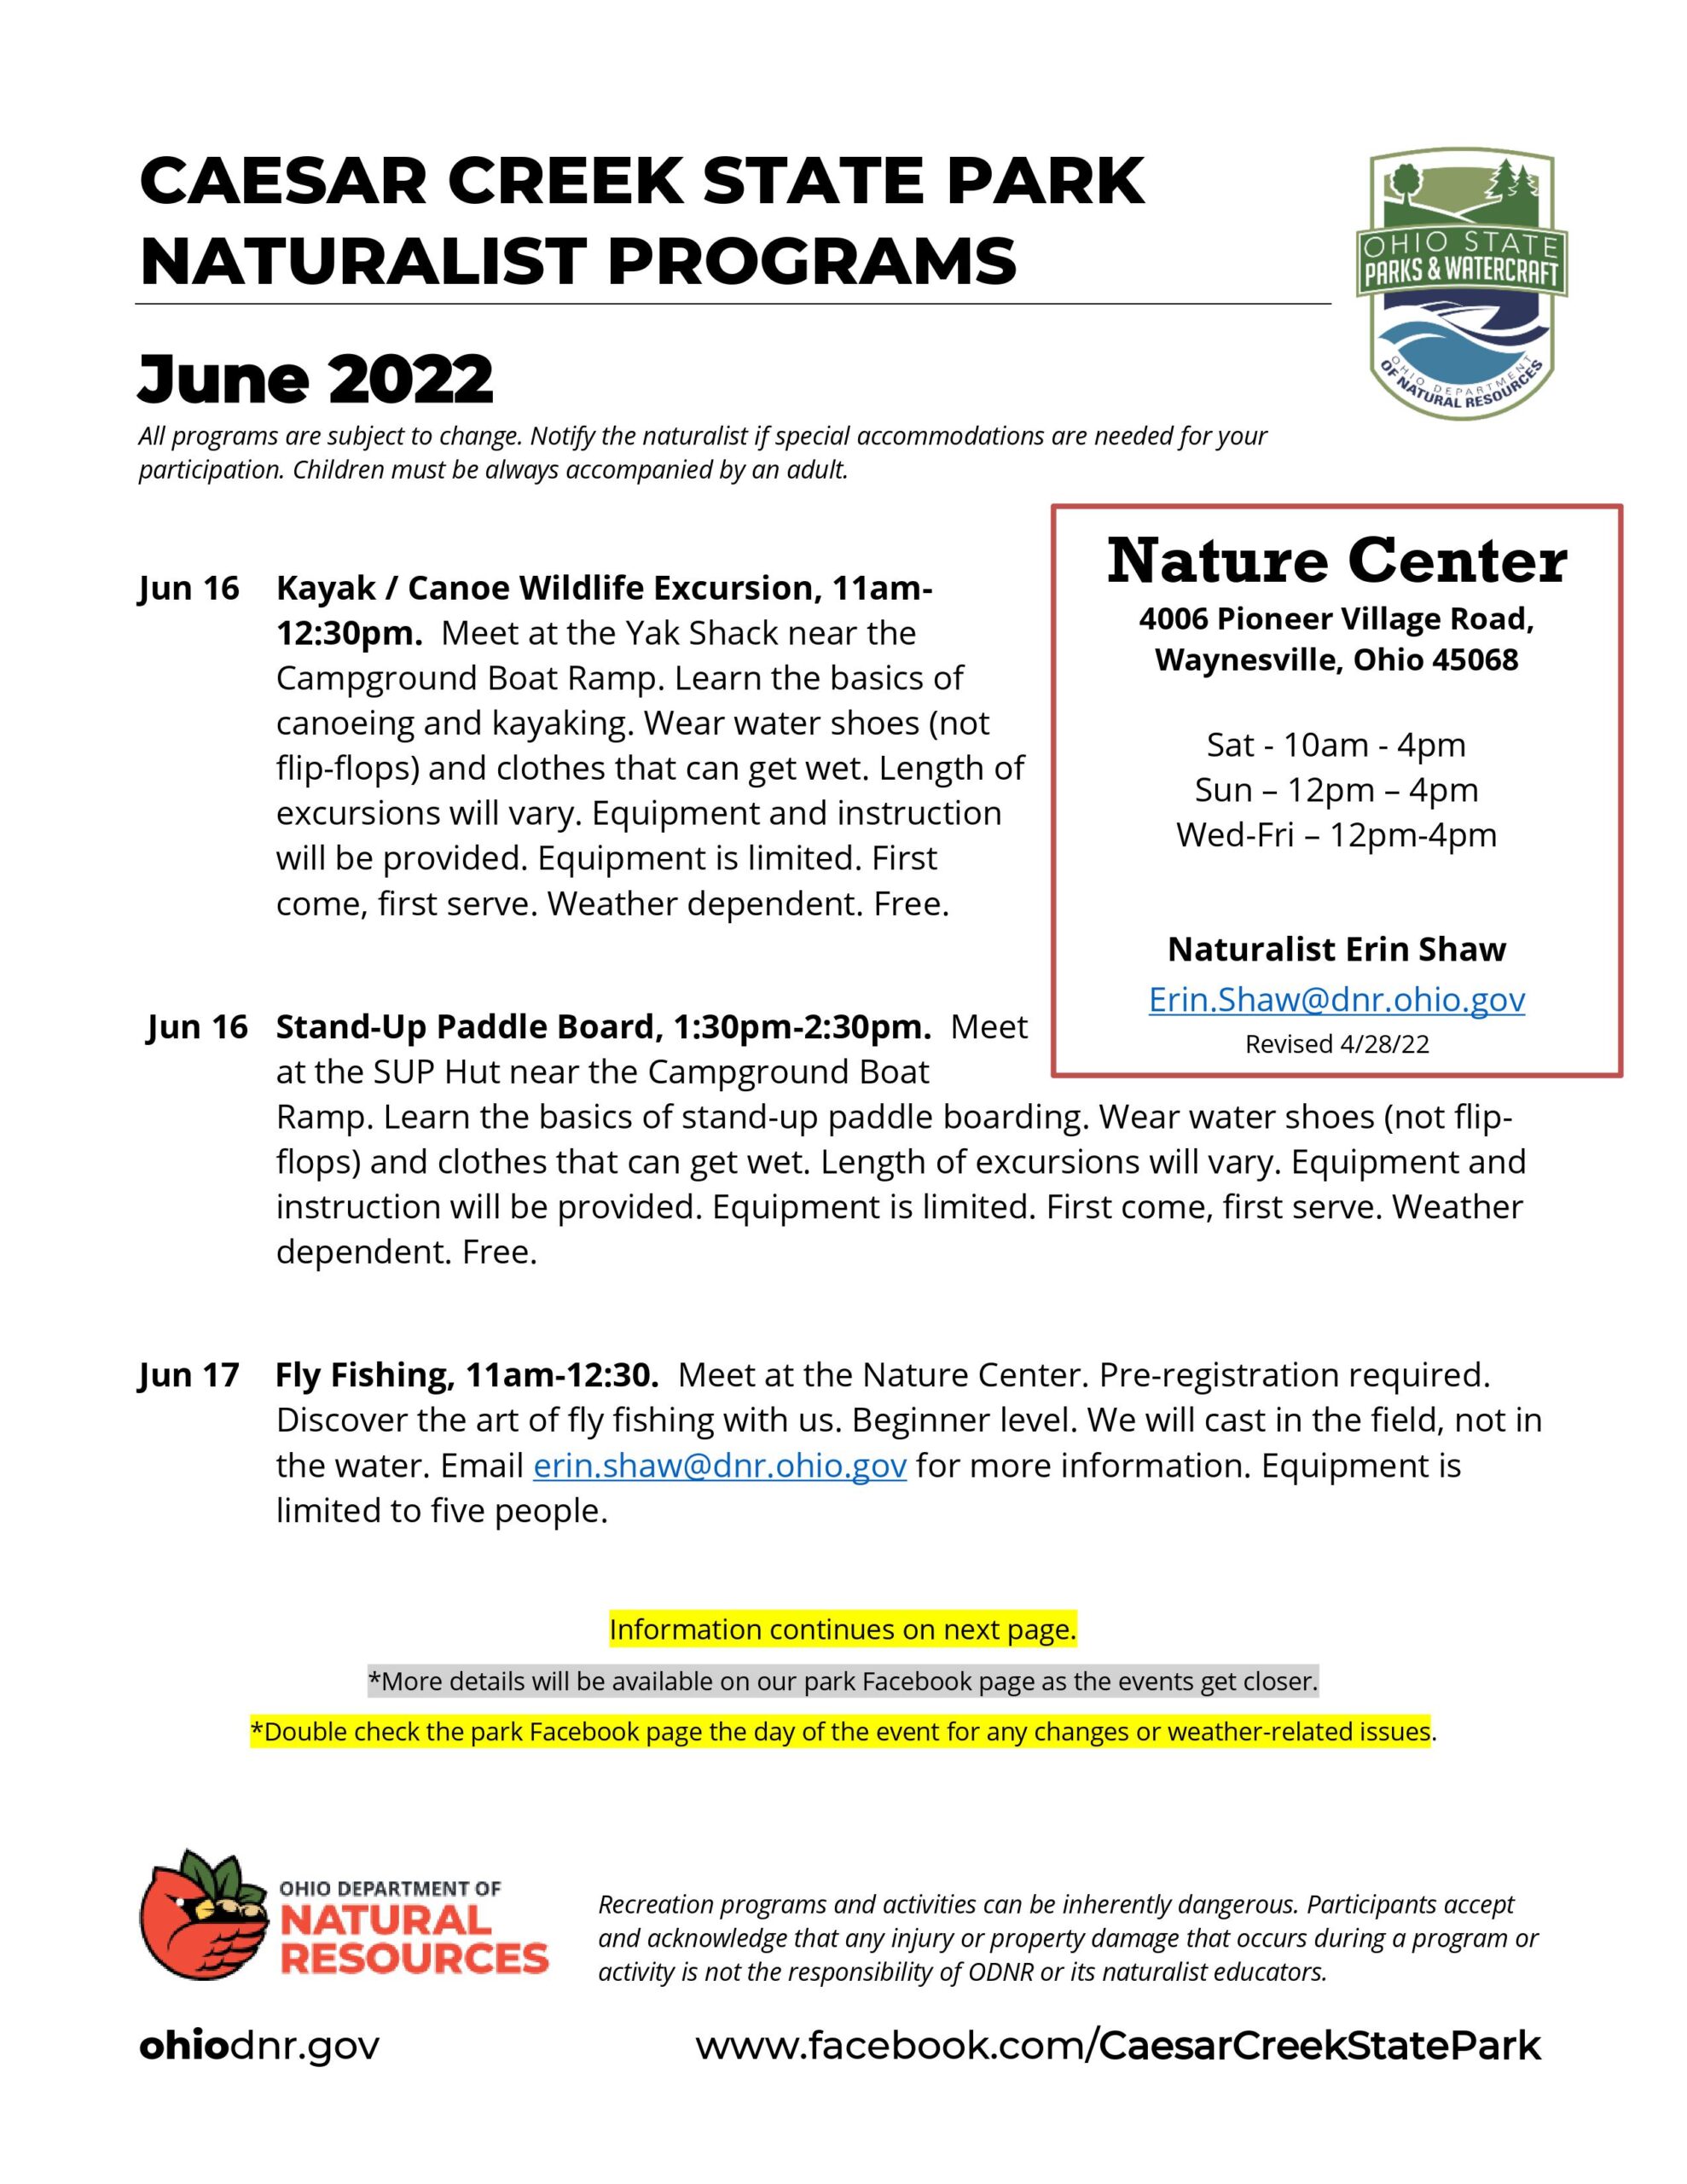 June 2022 Programs4